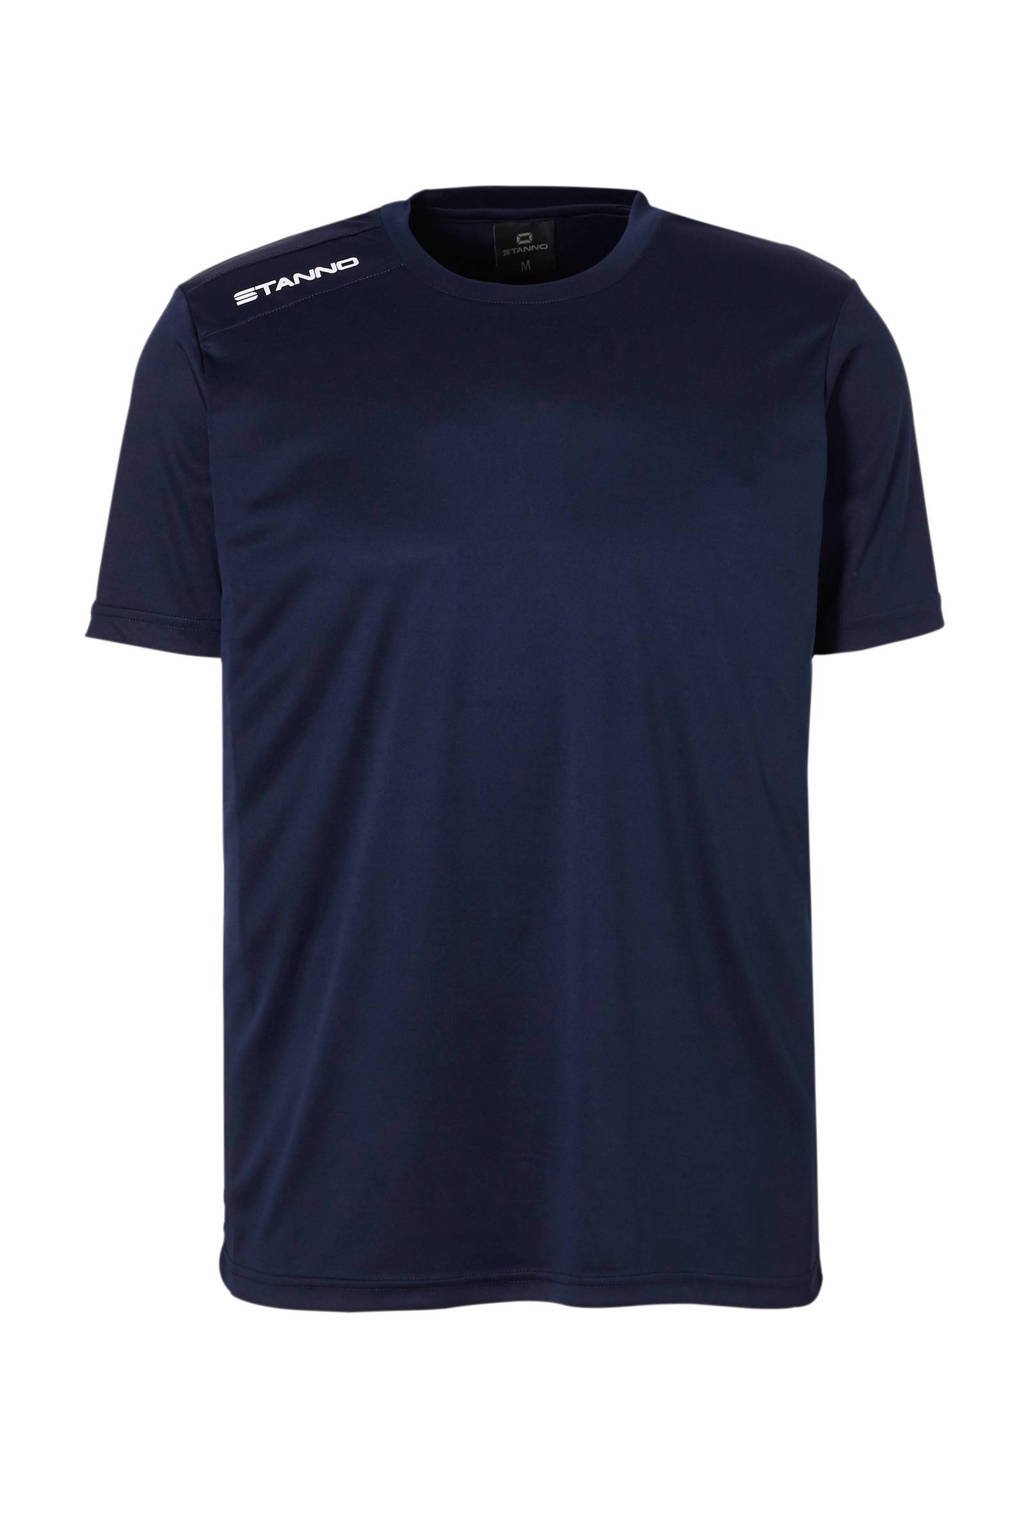 Stanno Senior  sport T-shirt donkerblauw